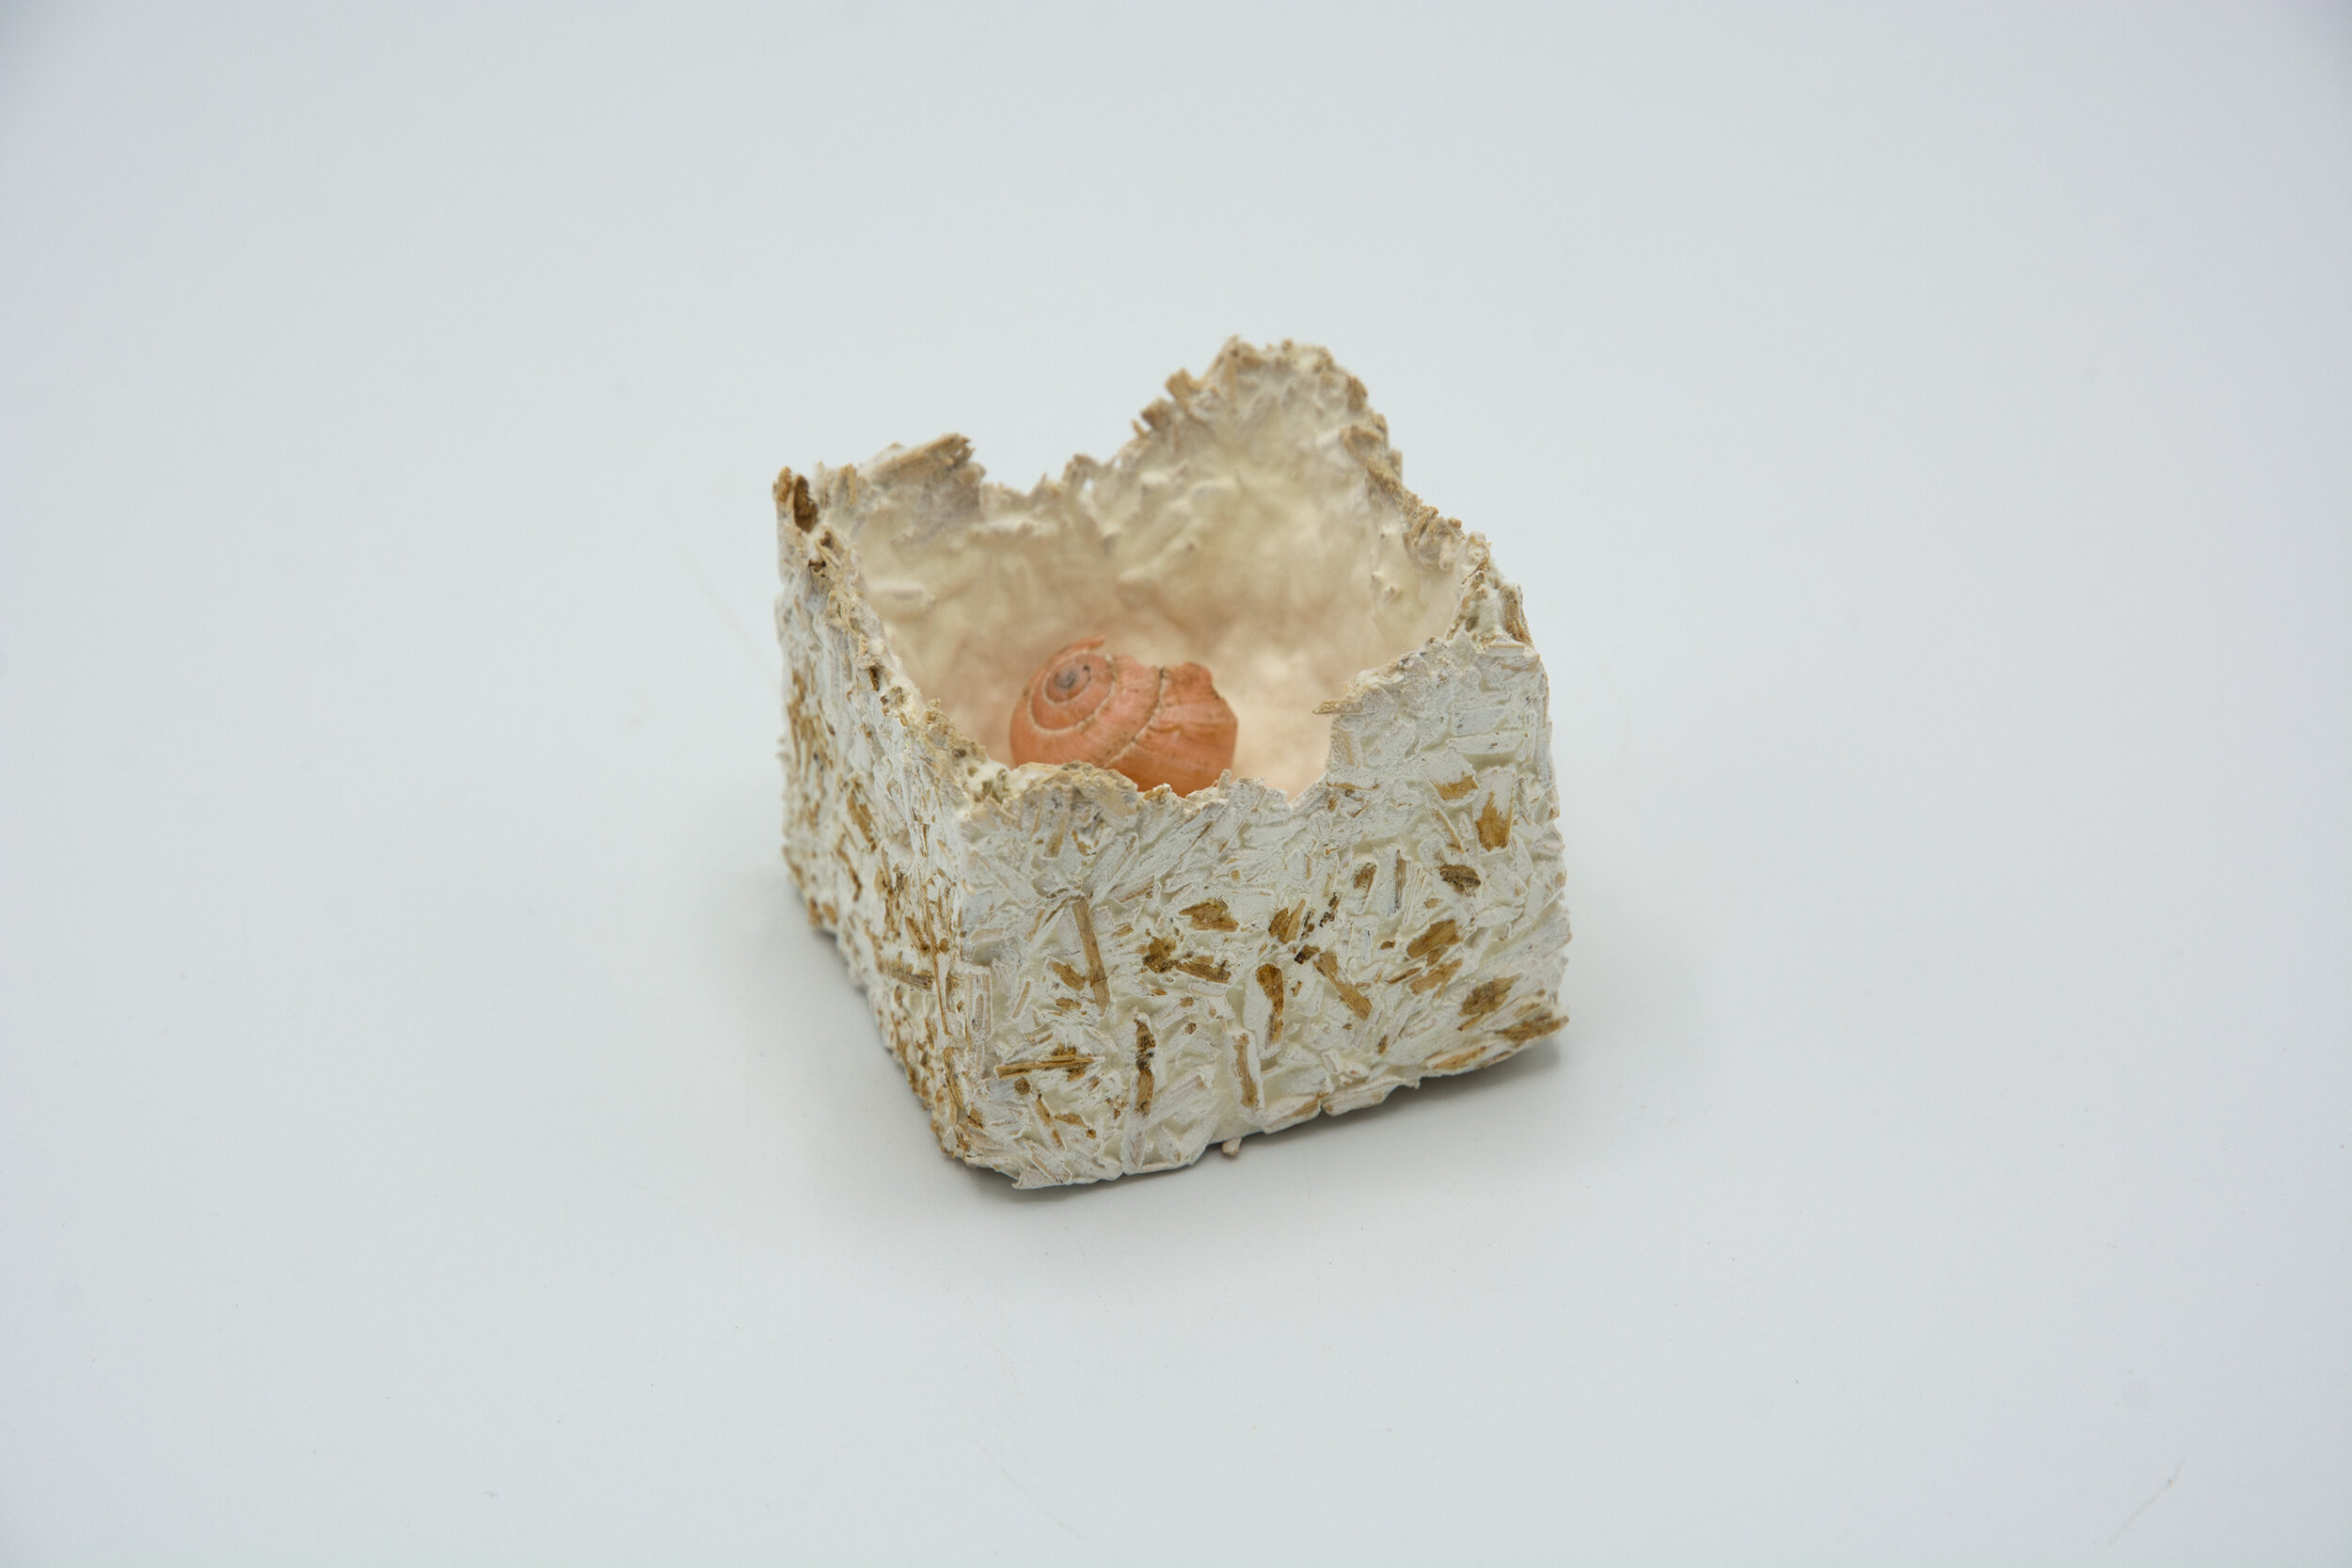  Kelly M O'Brien, One Meter Quadrat, detail, small cube. Mycelium, snail shell ©2021 